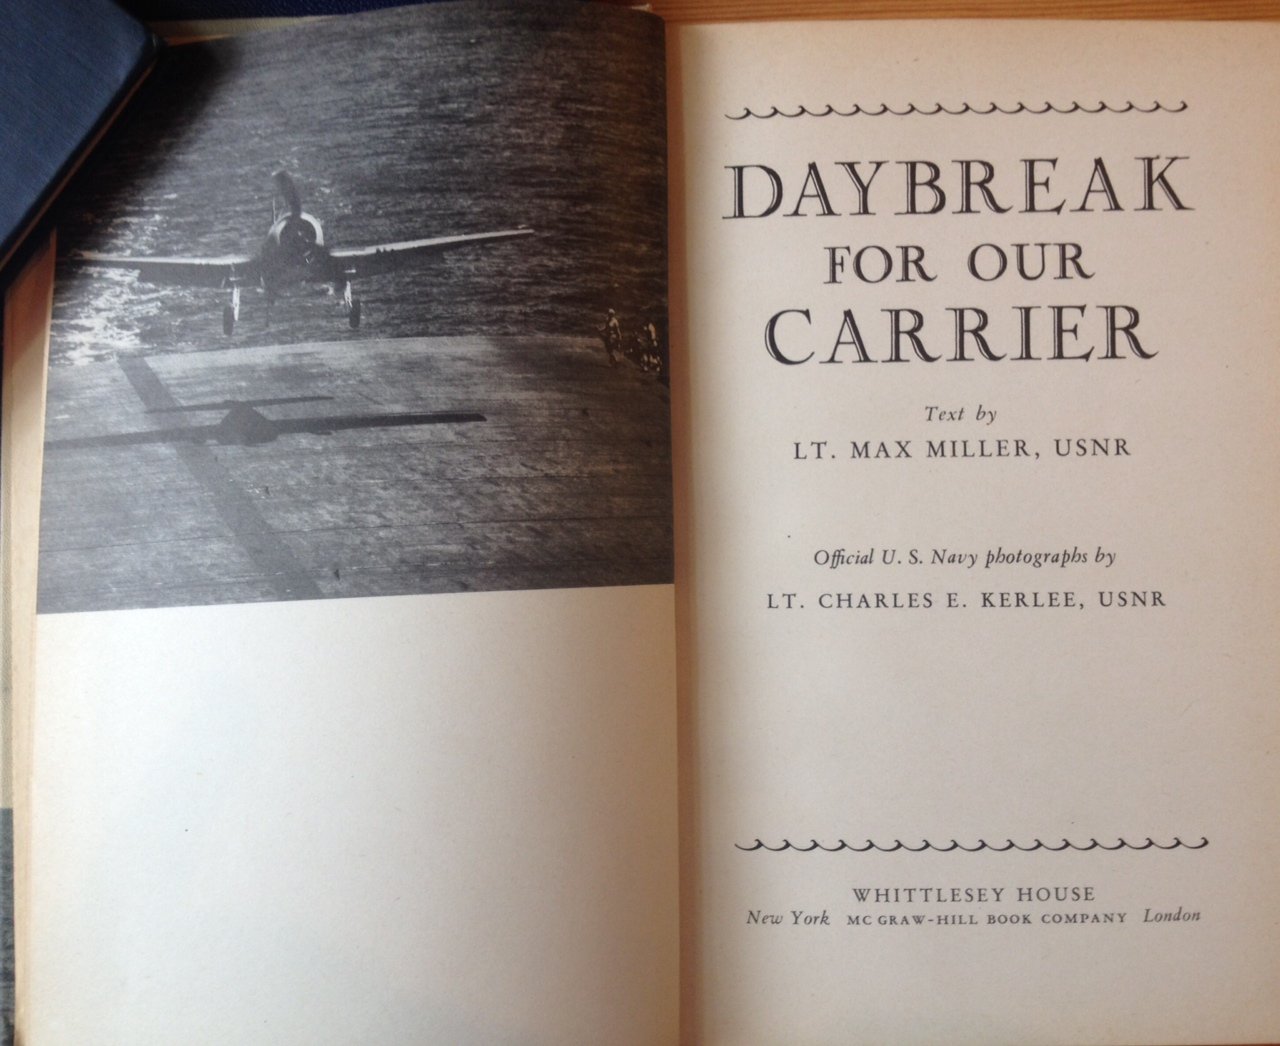 Miller, Max. Lt. USNR. - Daybreak for our carrier